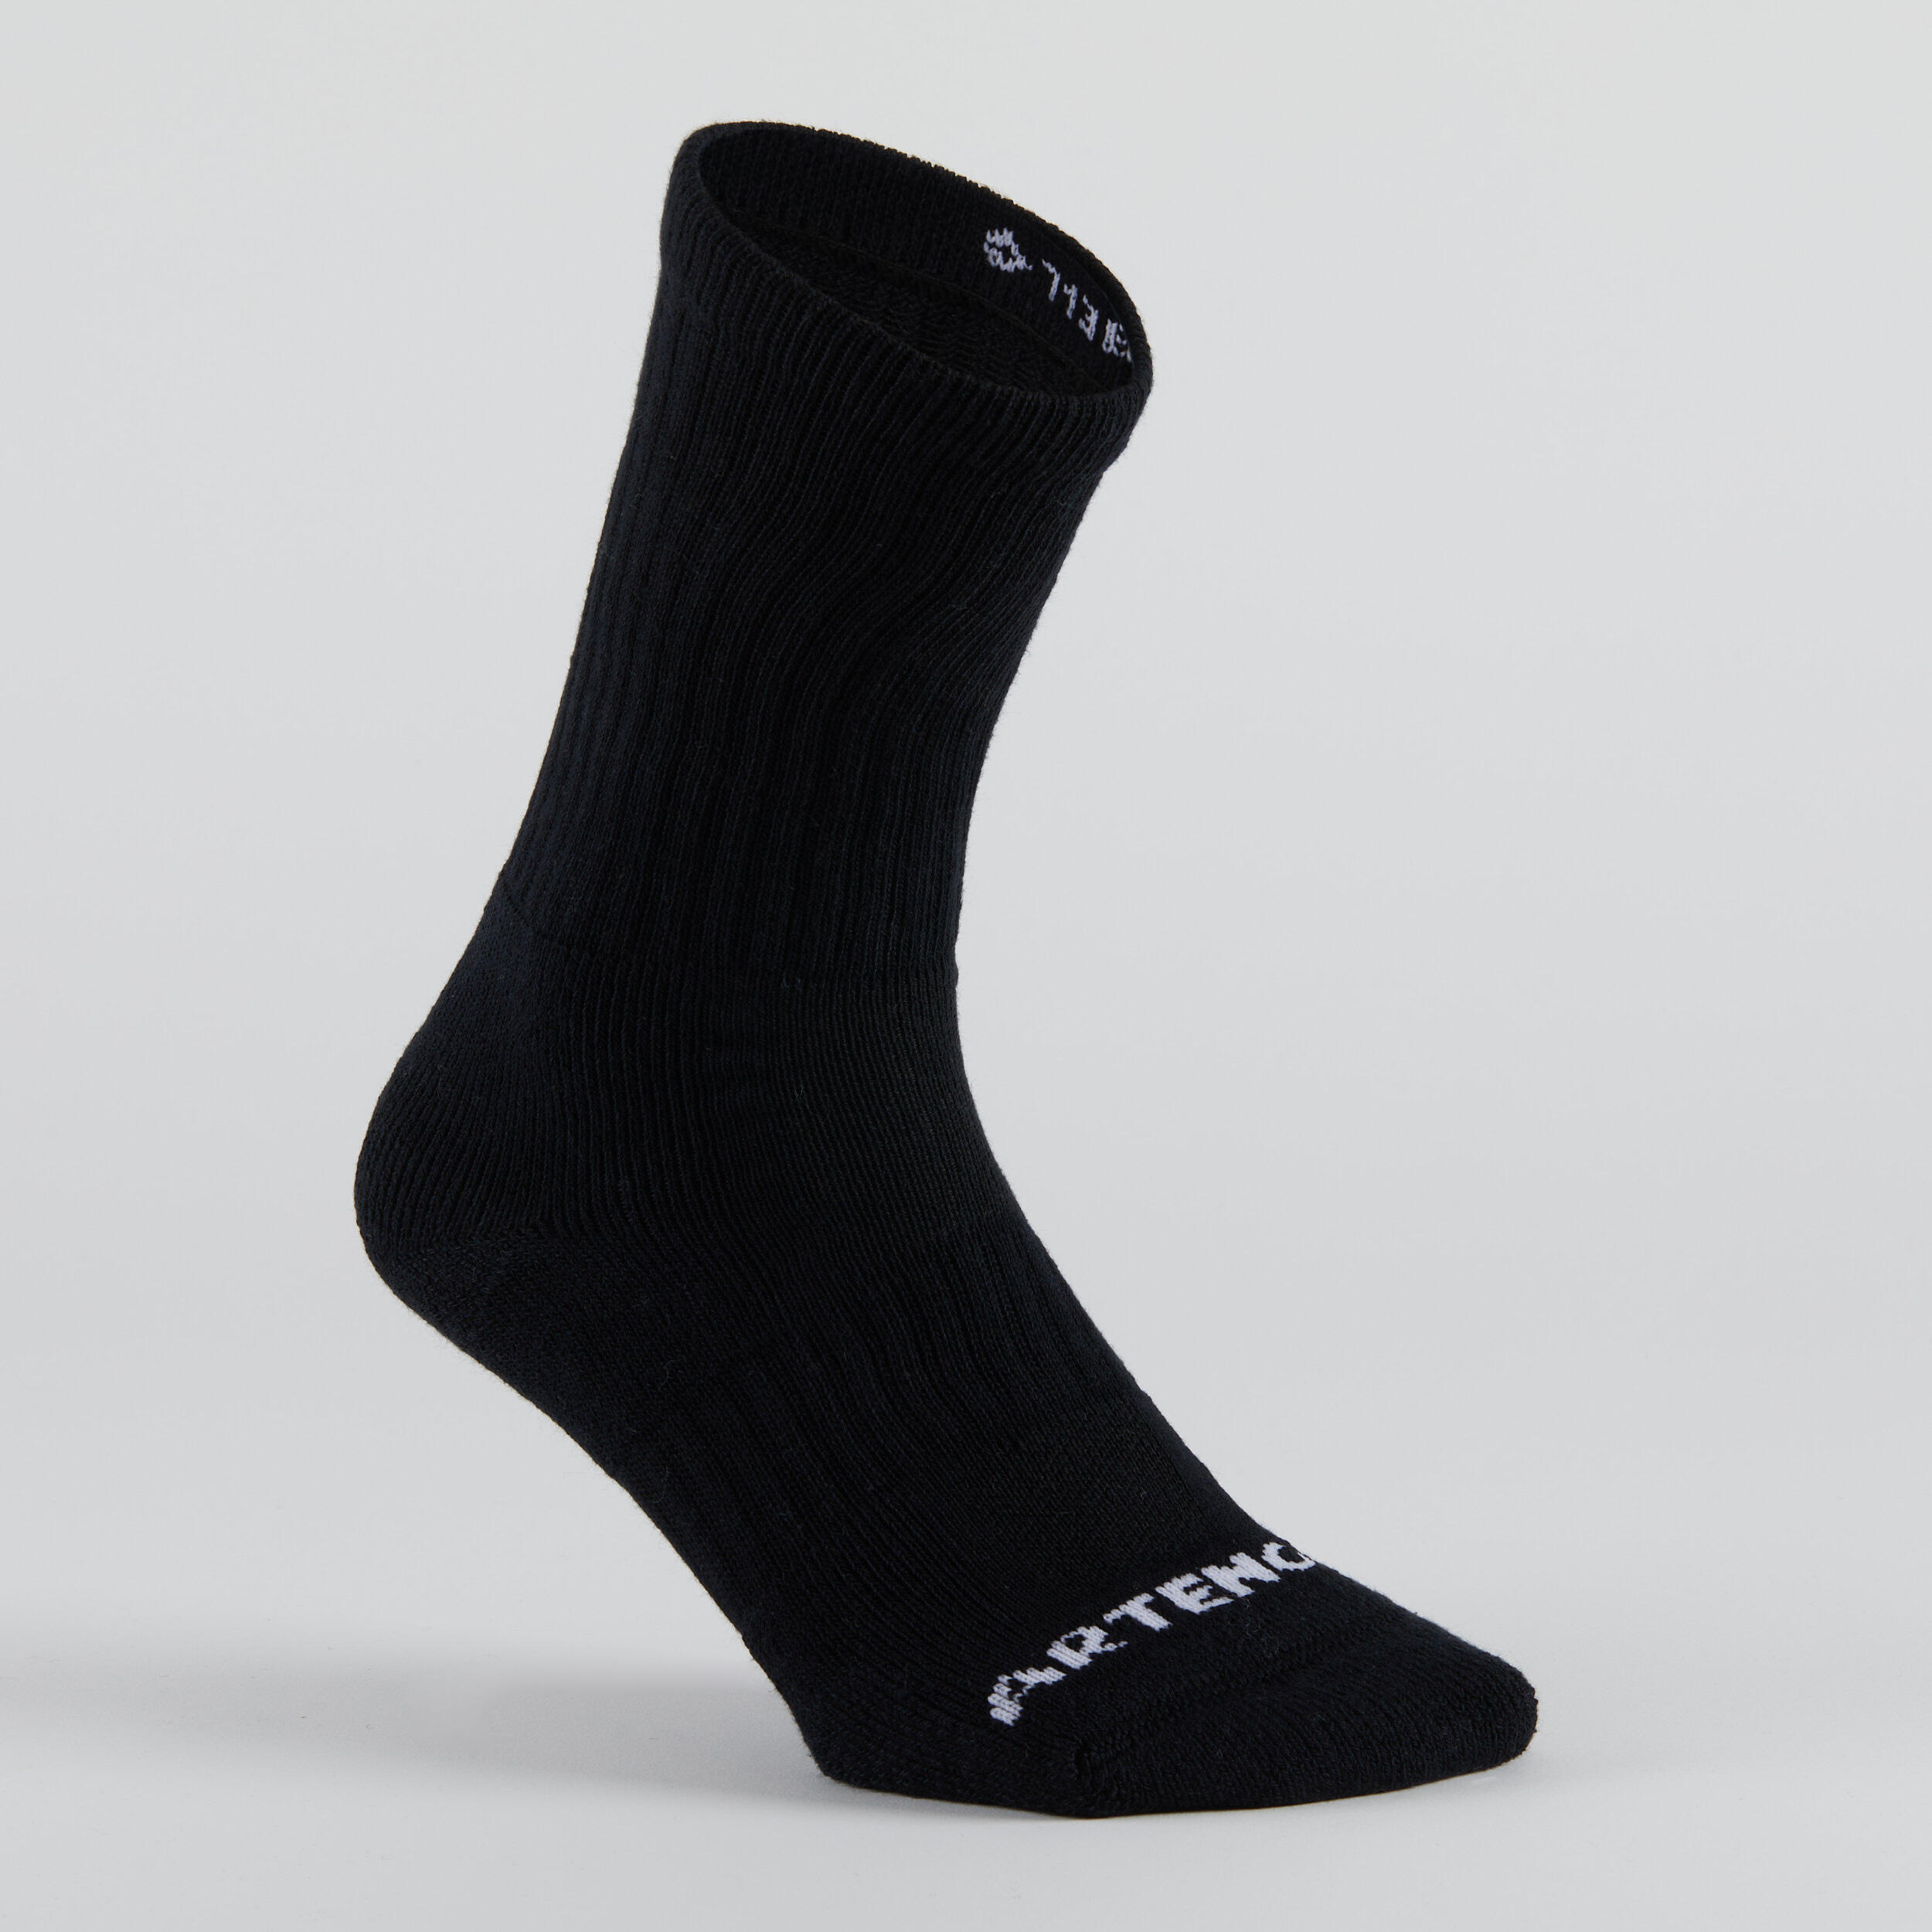 High Tennis Socks RS 500 Tri-Pack - Black/Stripes 4/11